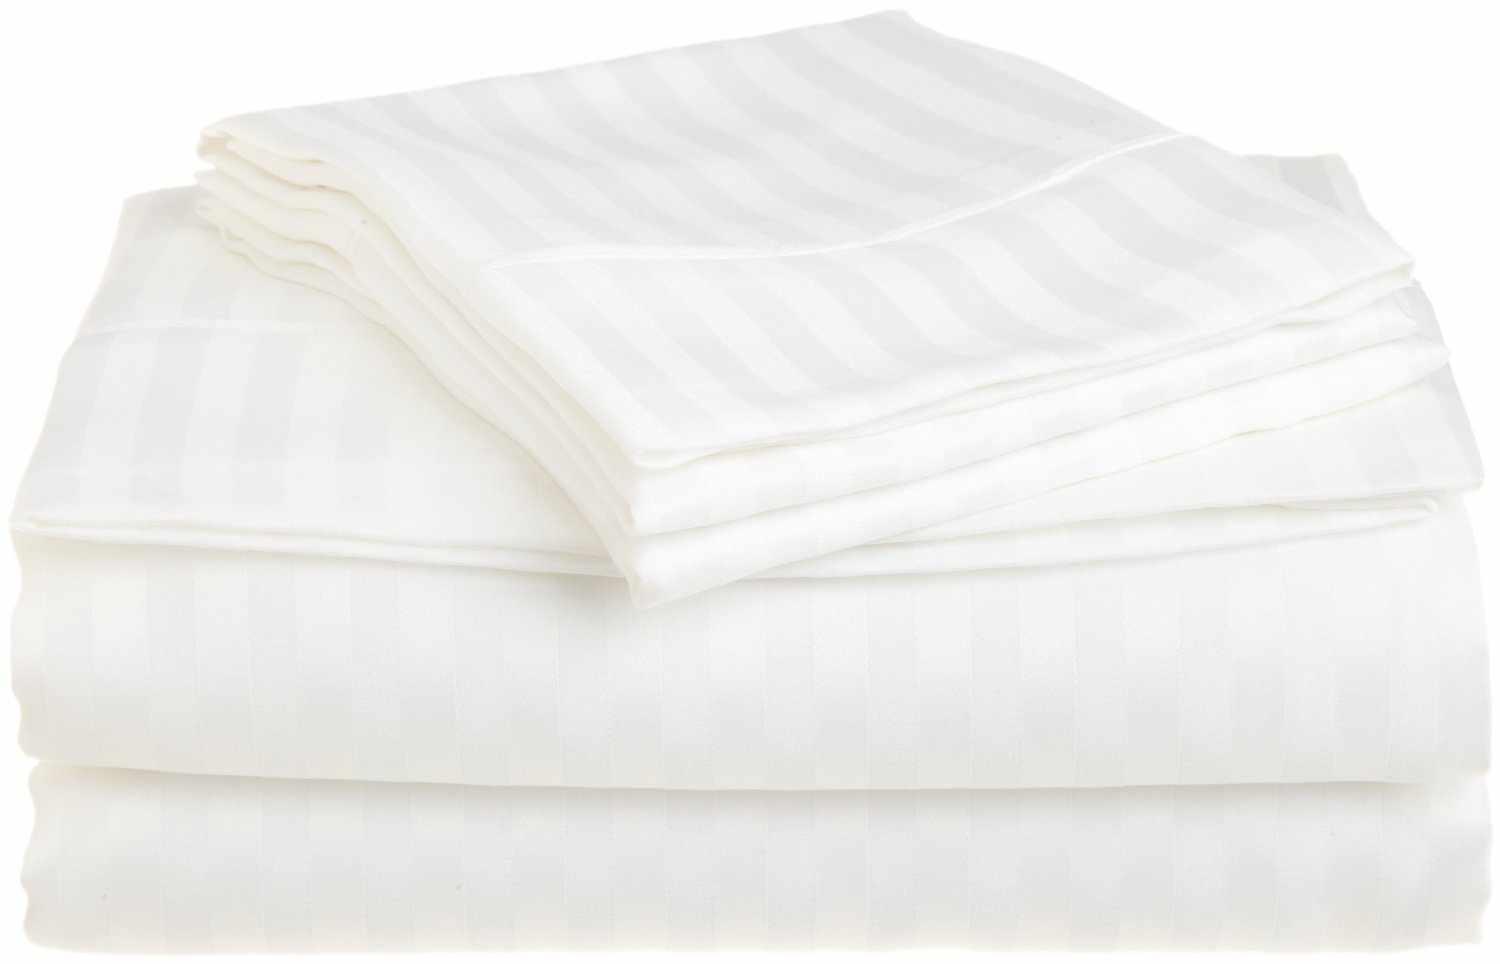  Superior Microfiber Wrinkle Resistant and Breathable Stripe Deep Pocket Bed Sheet Set - White